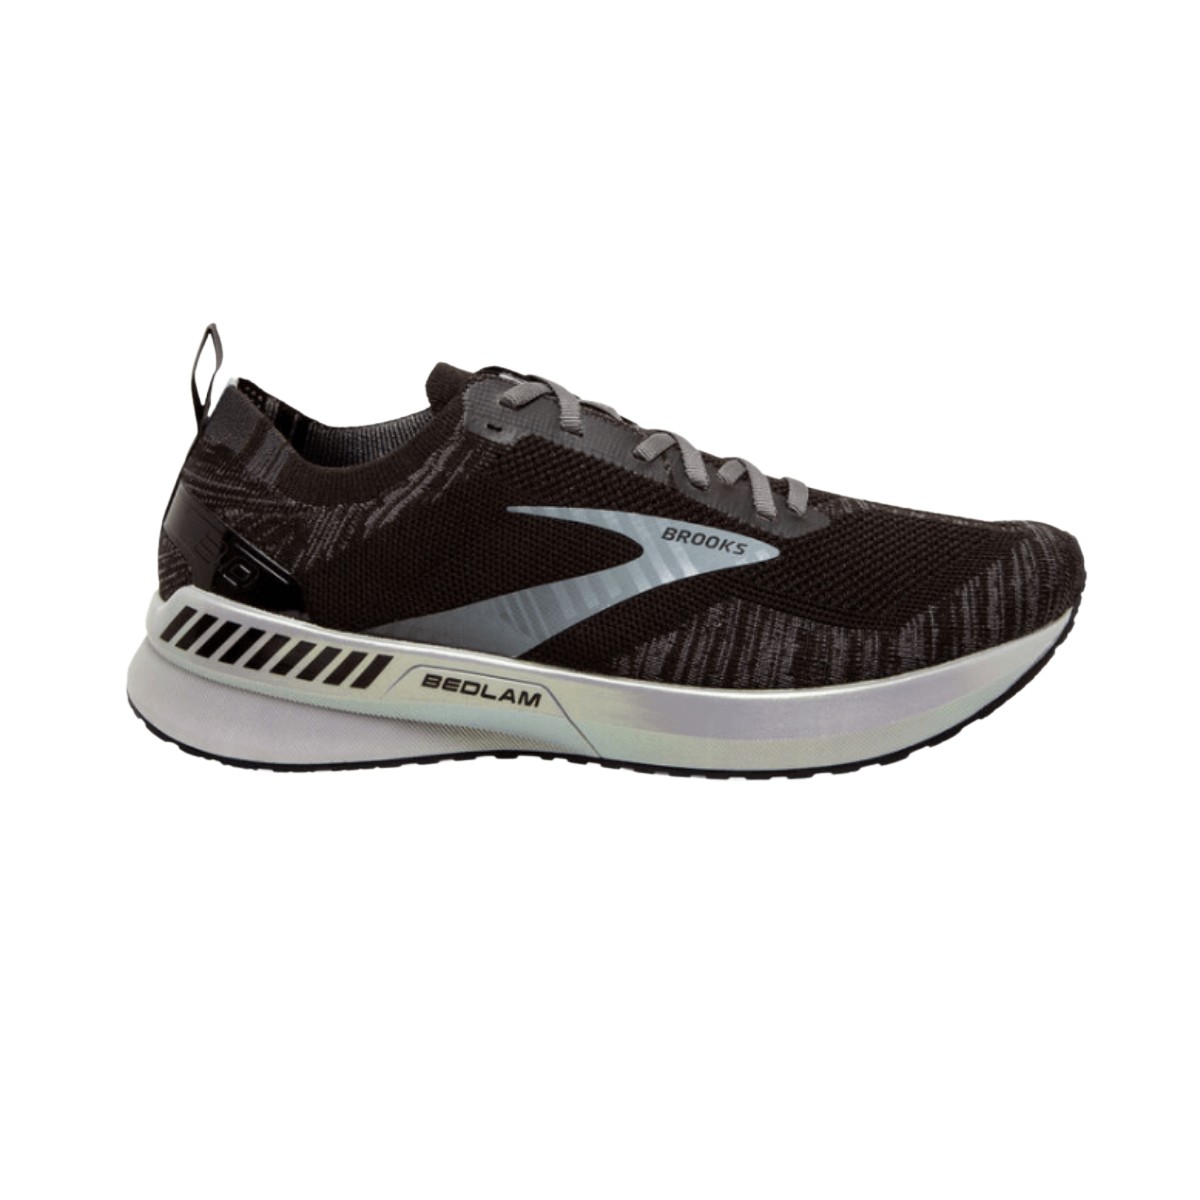 Brooks Bedlam 3 Shoes Black Gray AW20, Size 42,5 - EUR